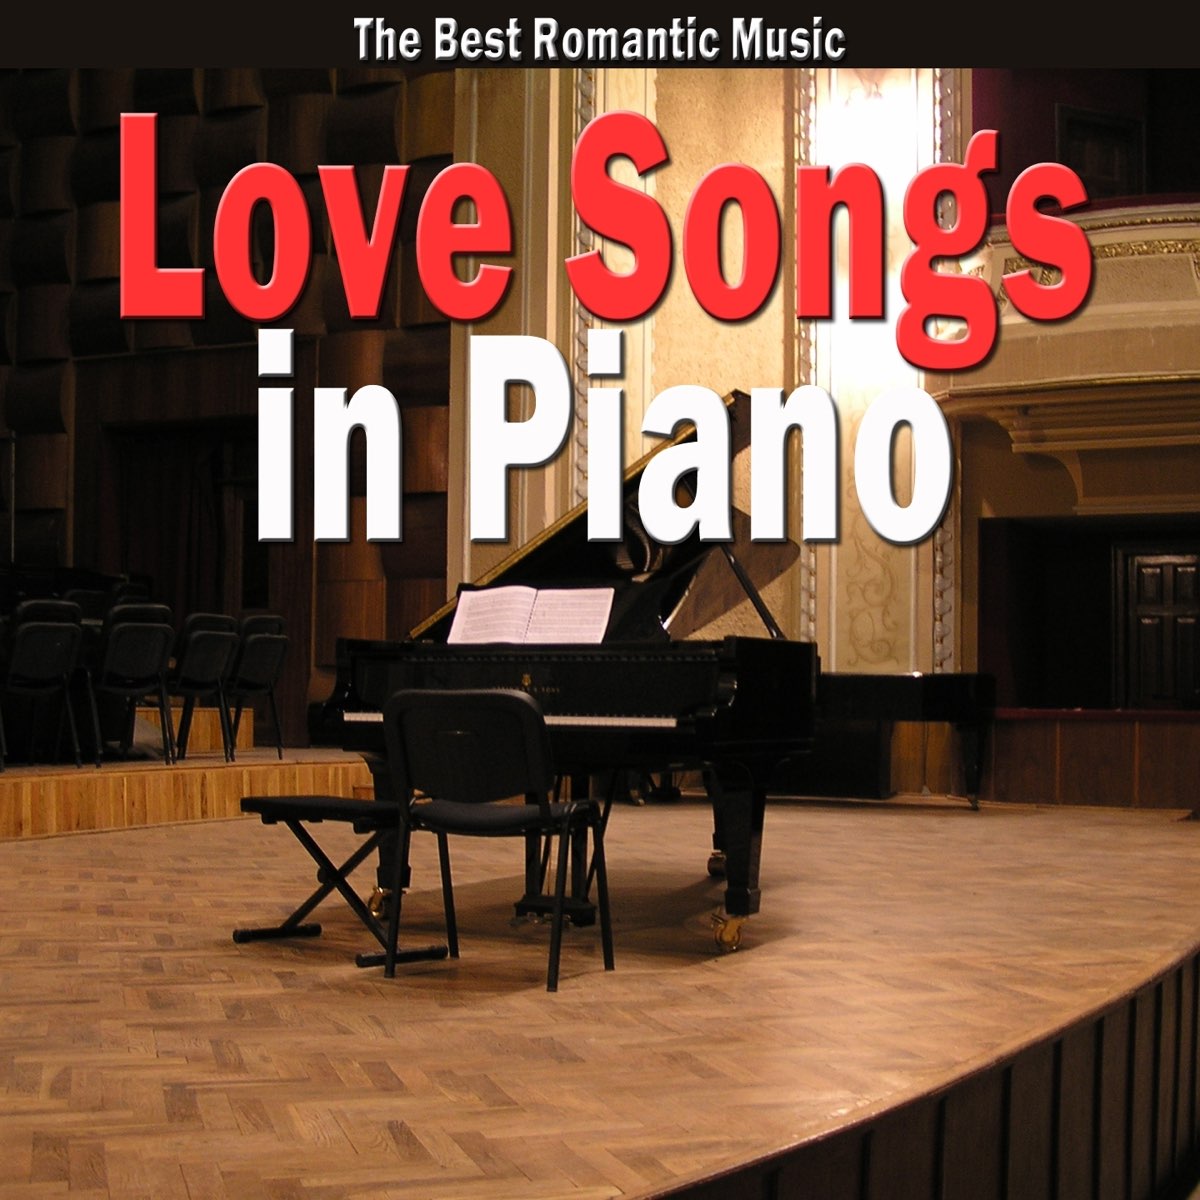 Love Songs in Piano (The Best Romantic Music) - Album by Giuseppe Sbernini  - Apple Music